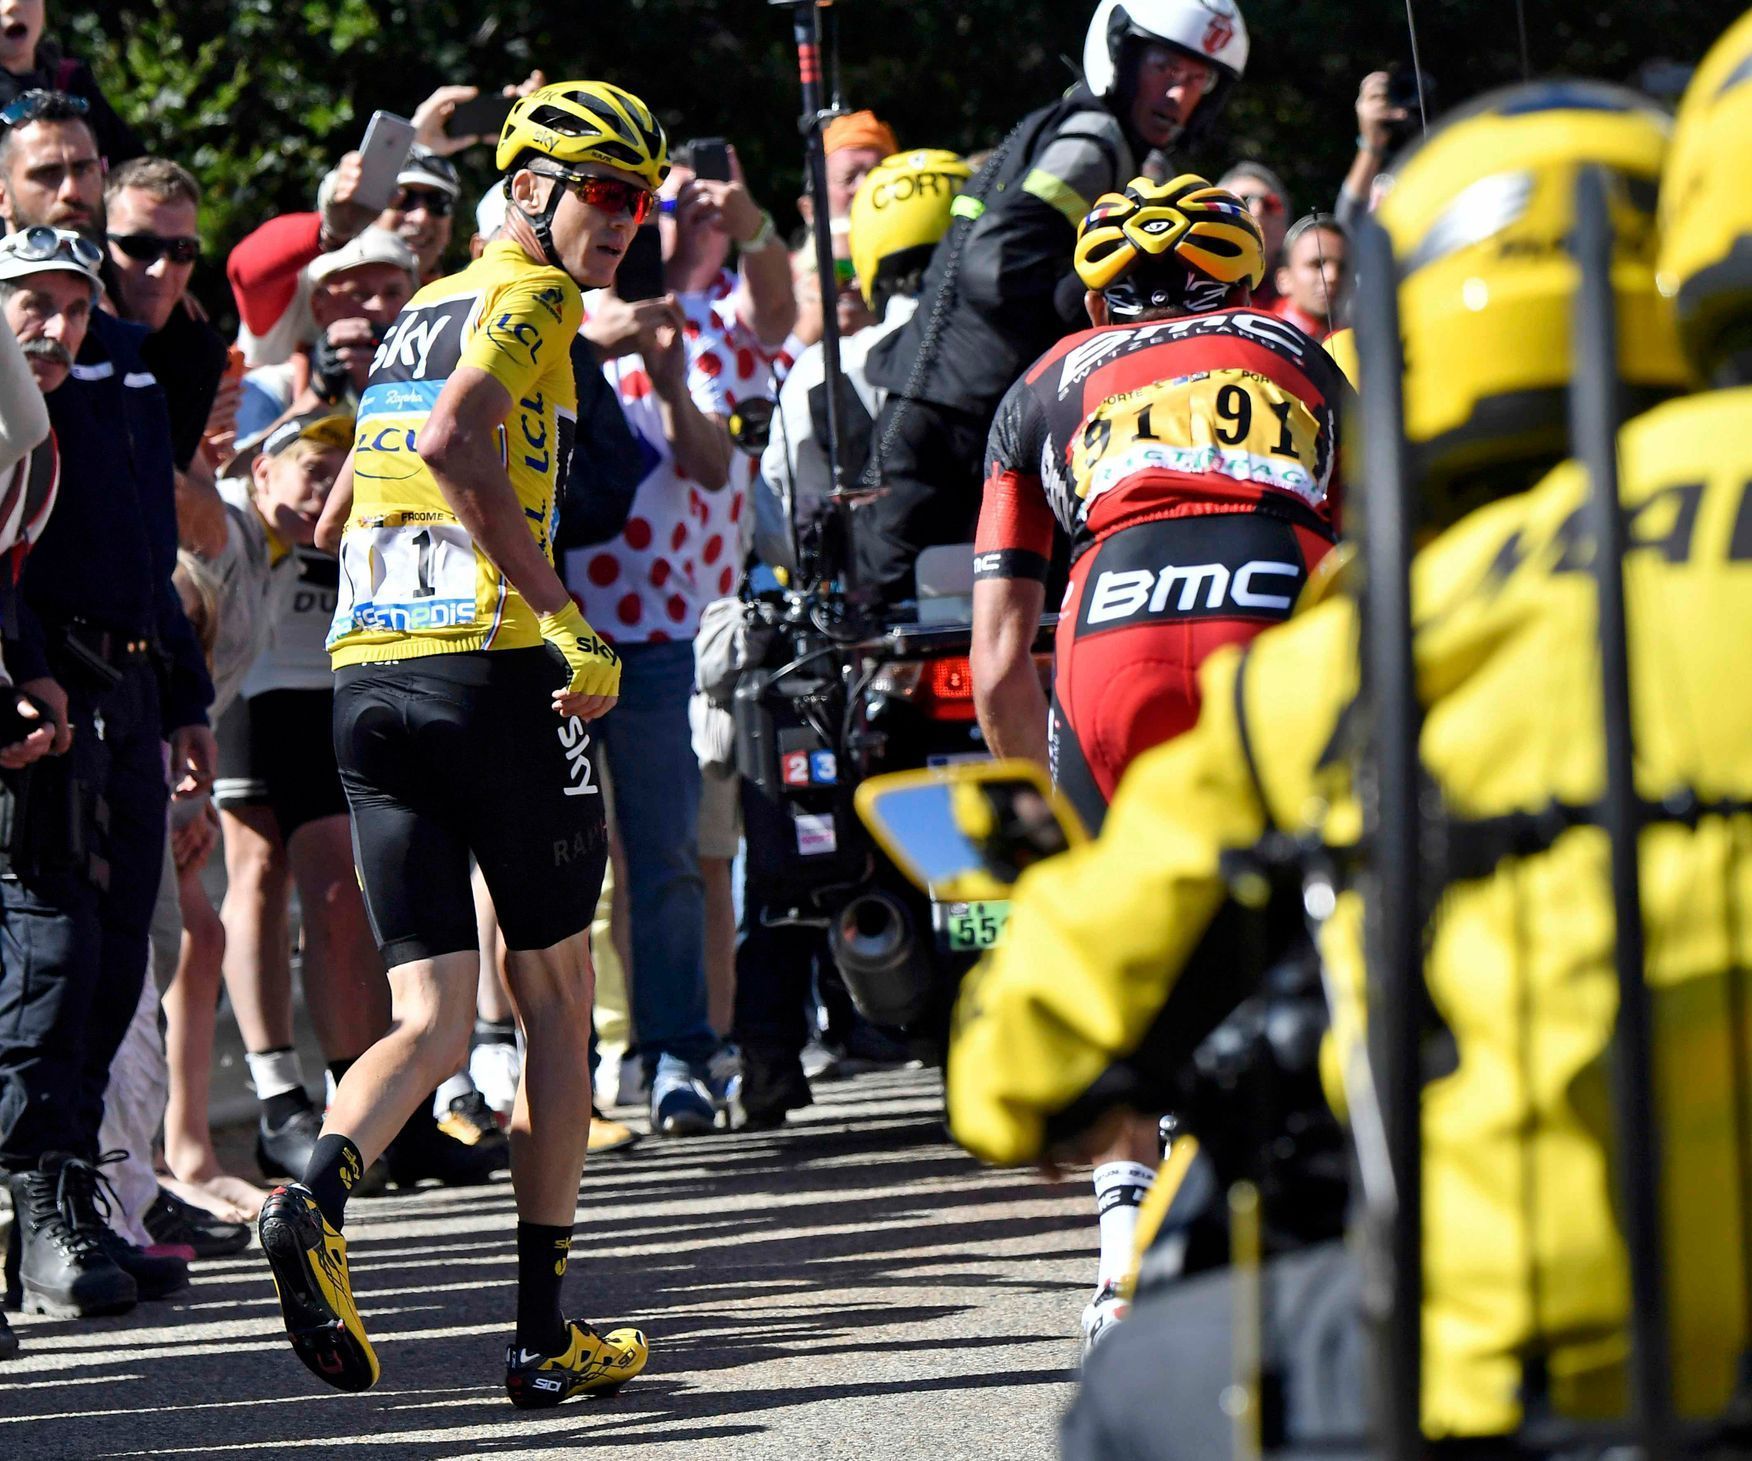 Tour de France 2016, 12. etapa: běžící Chris Froome